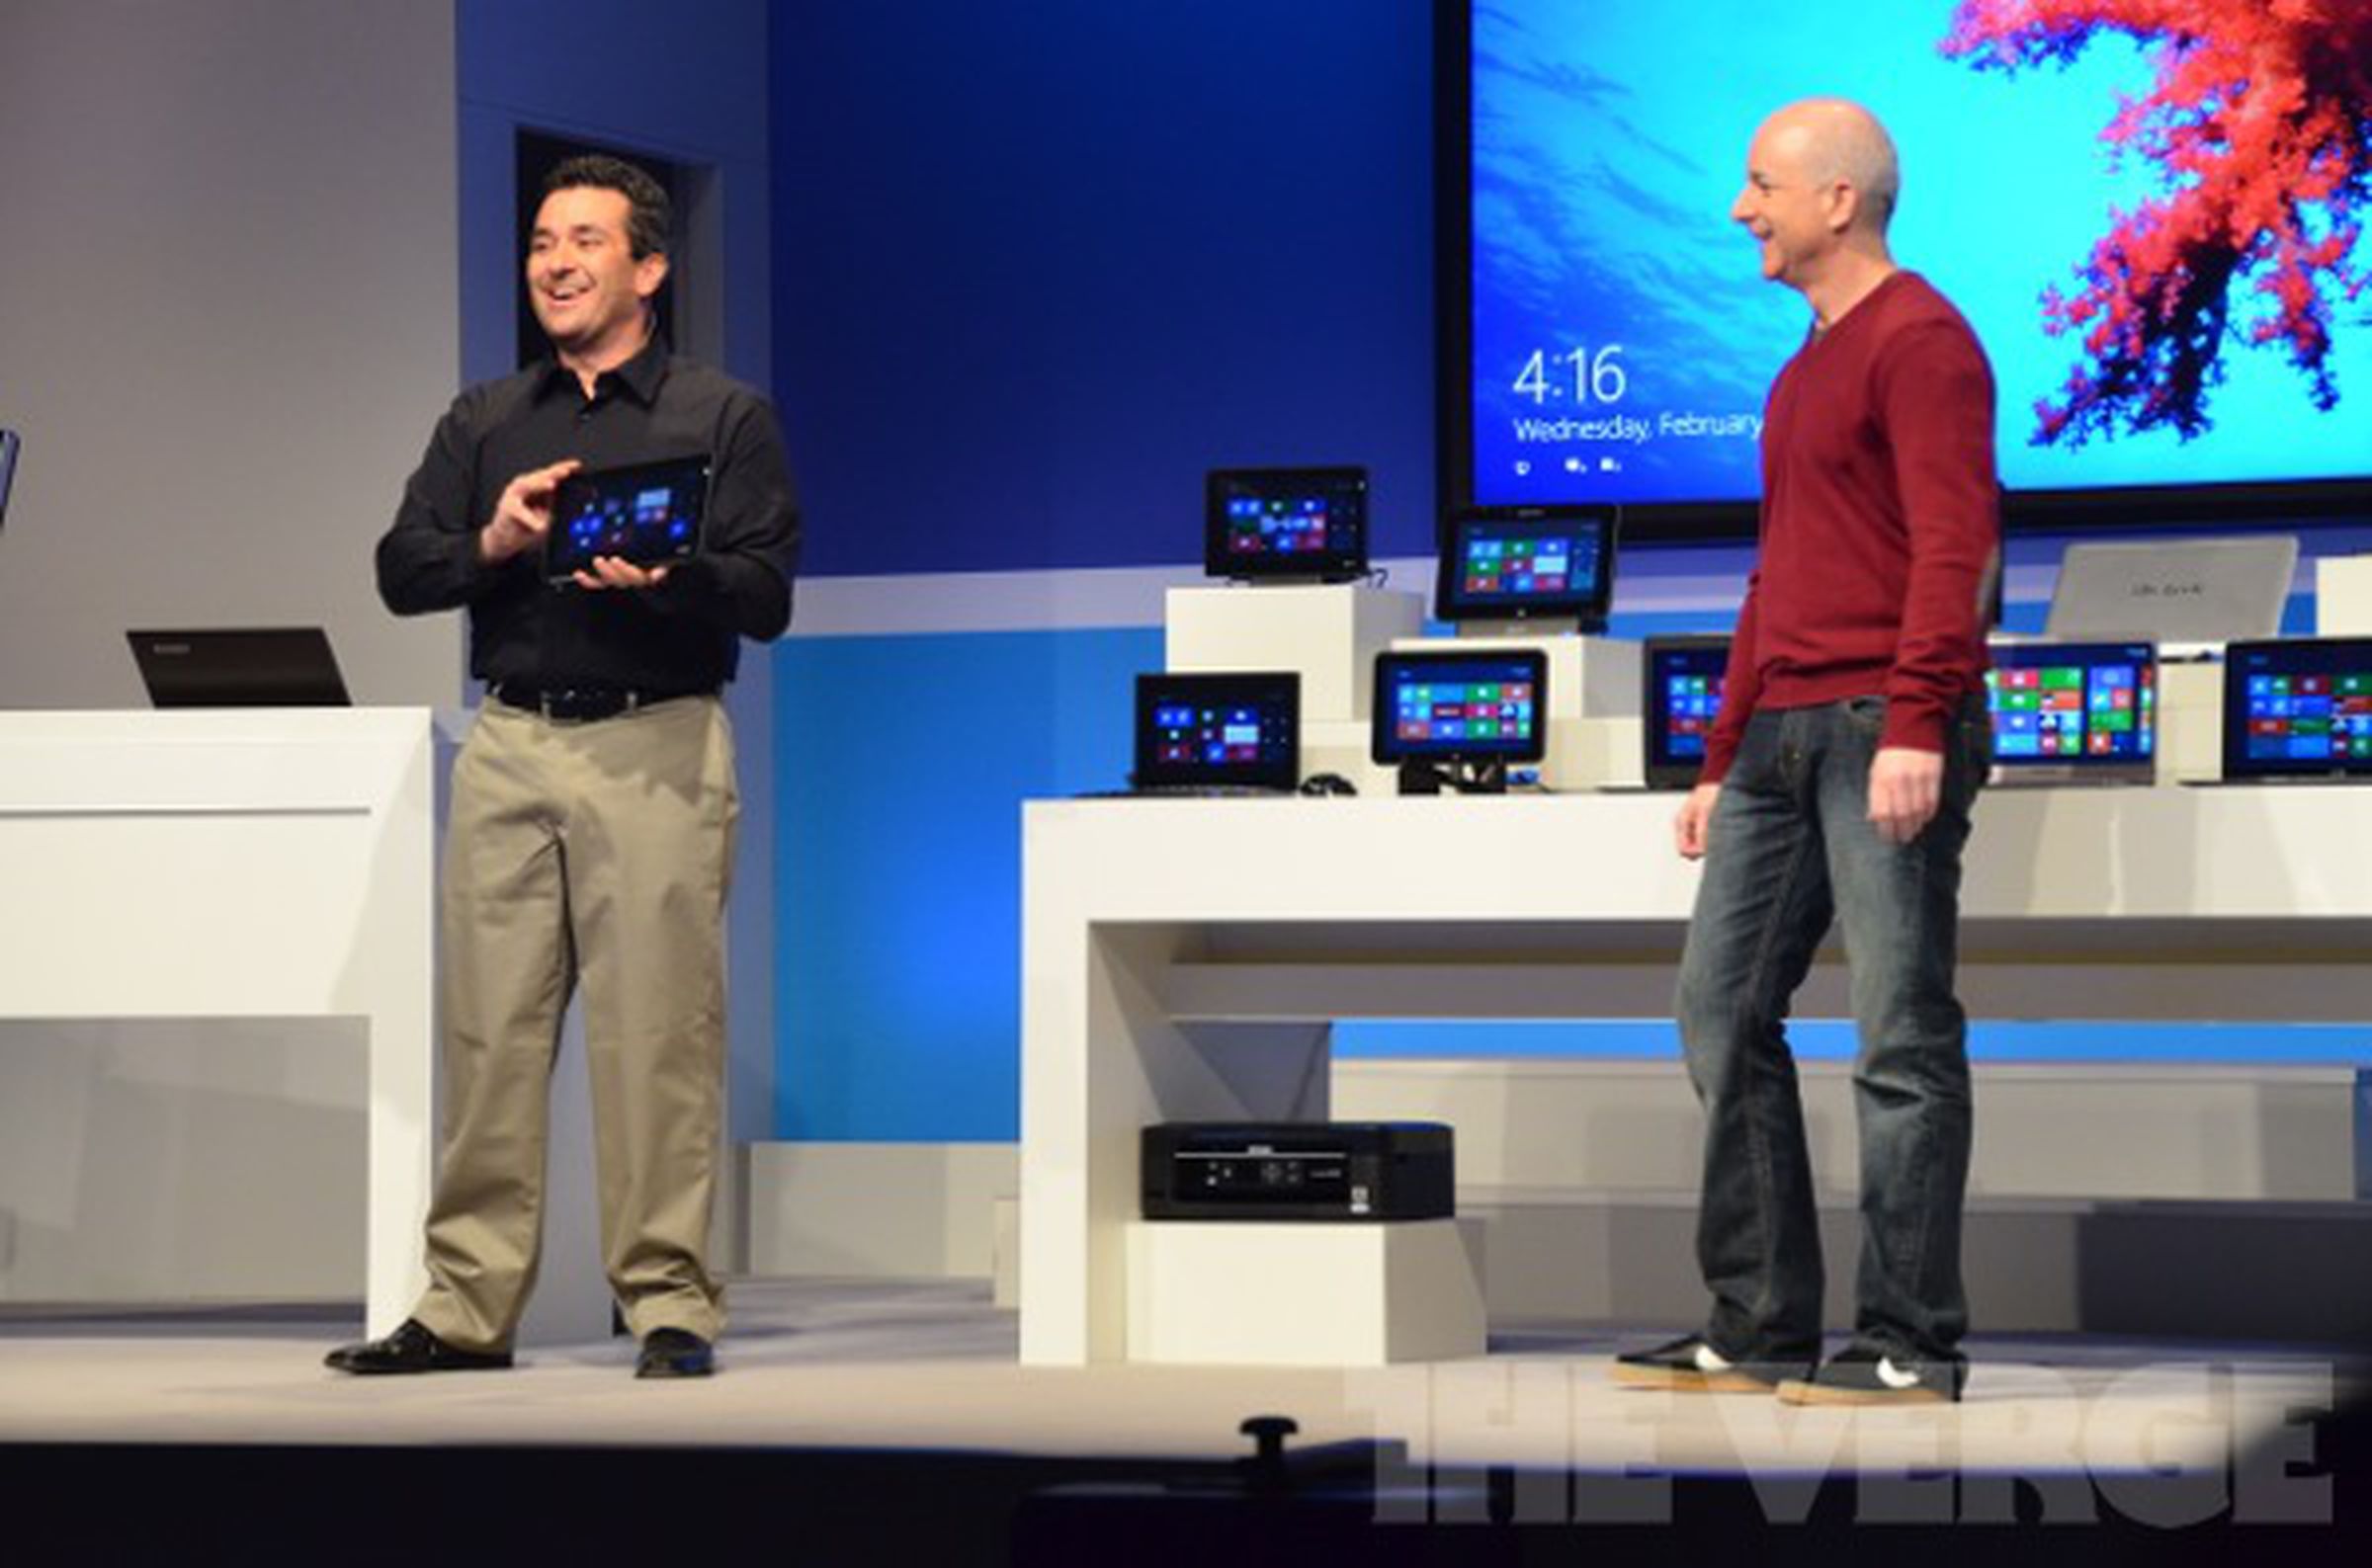 Windows 8 Mobile World Congress Hardware Gallery